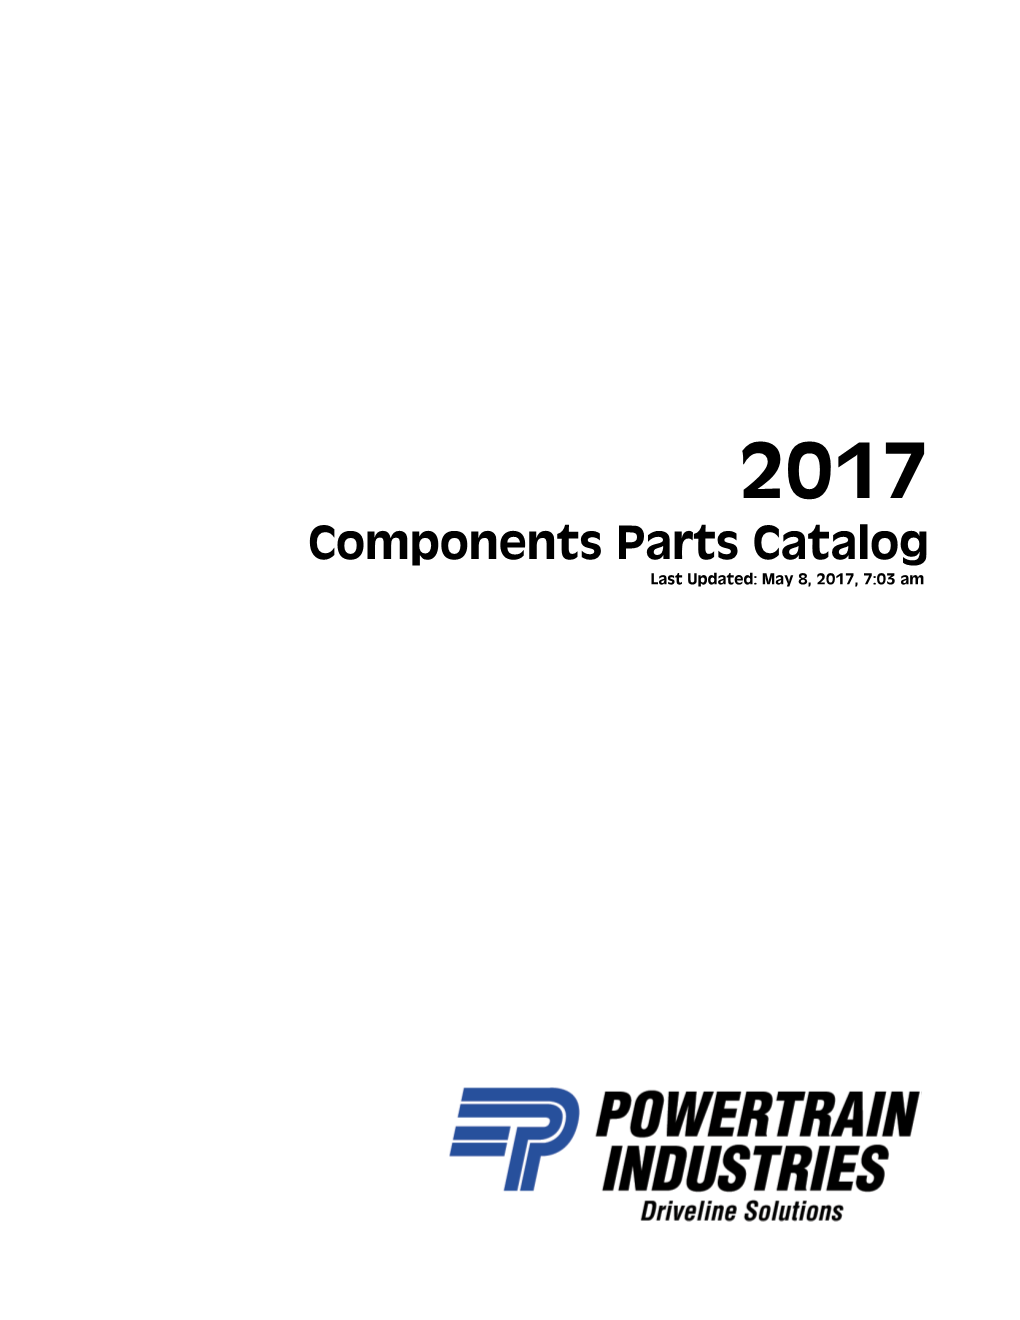 Powertrain Industries Components Parts Catalog